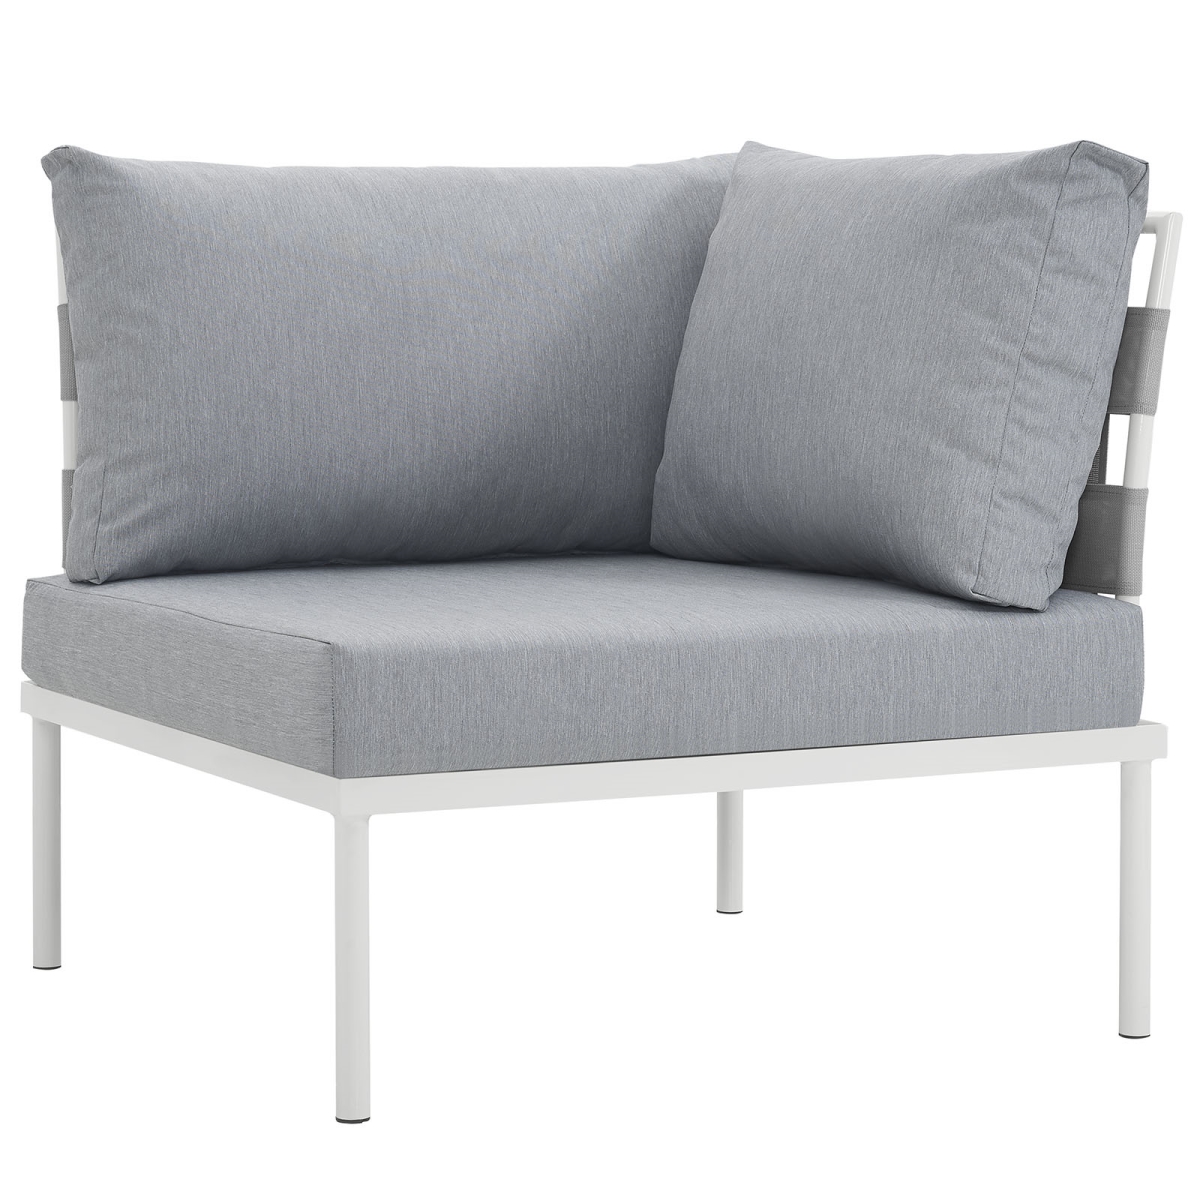 Eei-2601-whi-gry 32 X 33 In. Harmony Outdoor Patio Aluminum Corner Sofa - White & Gray